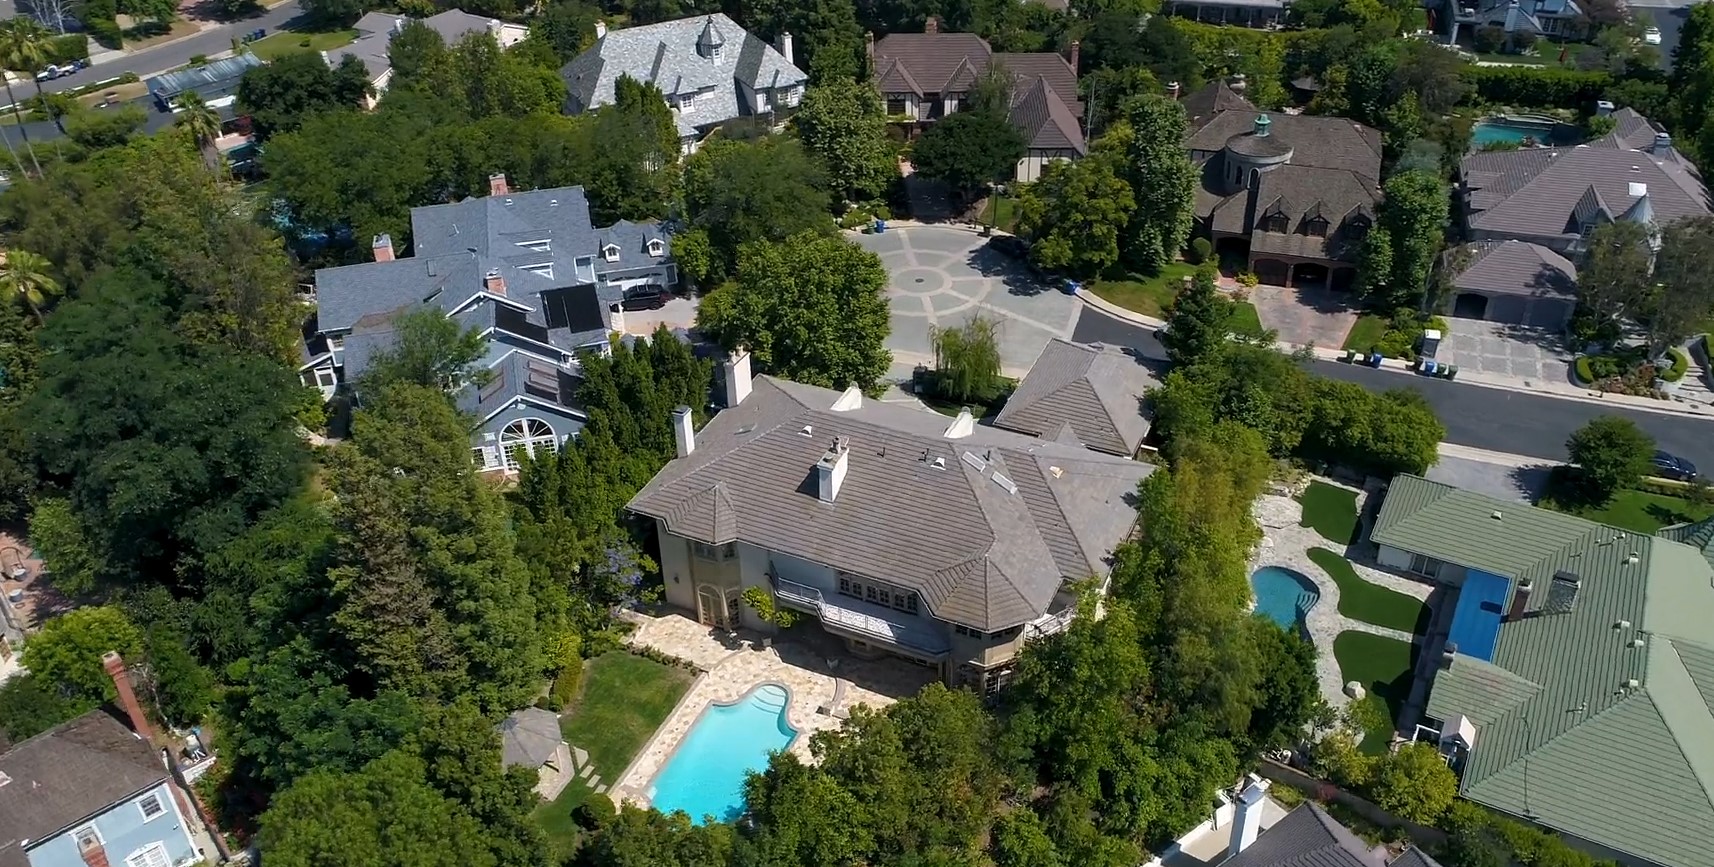 Swae Lee以430万美元出售洛杉矶豪宅